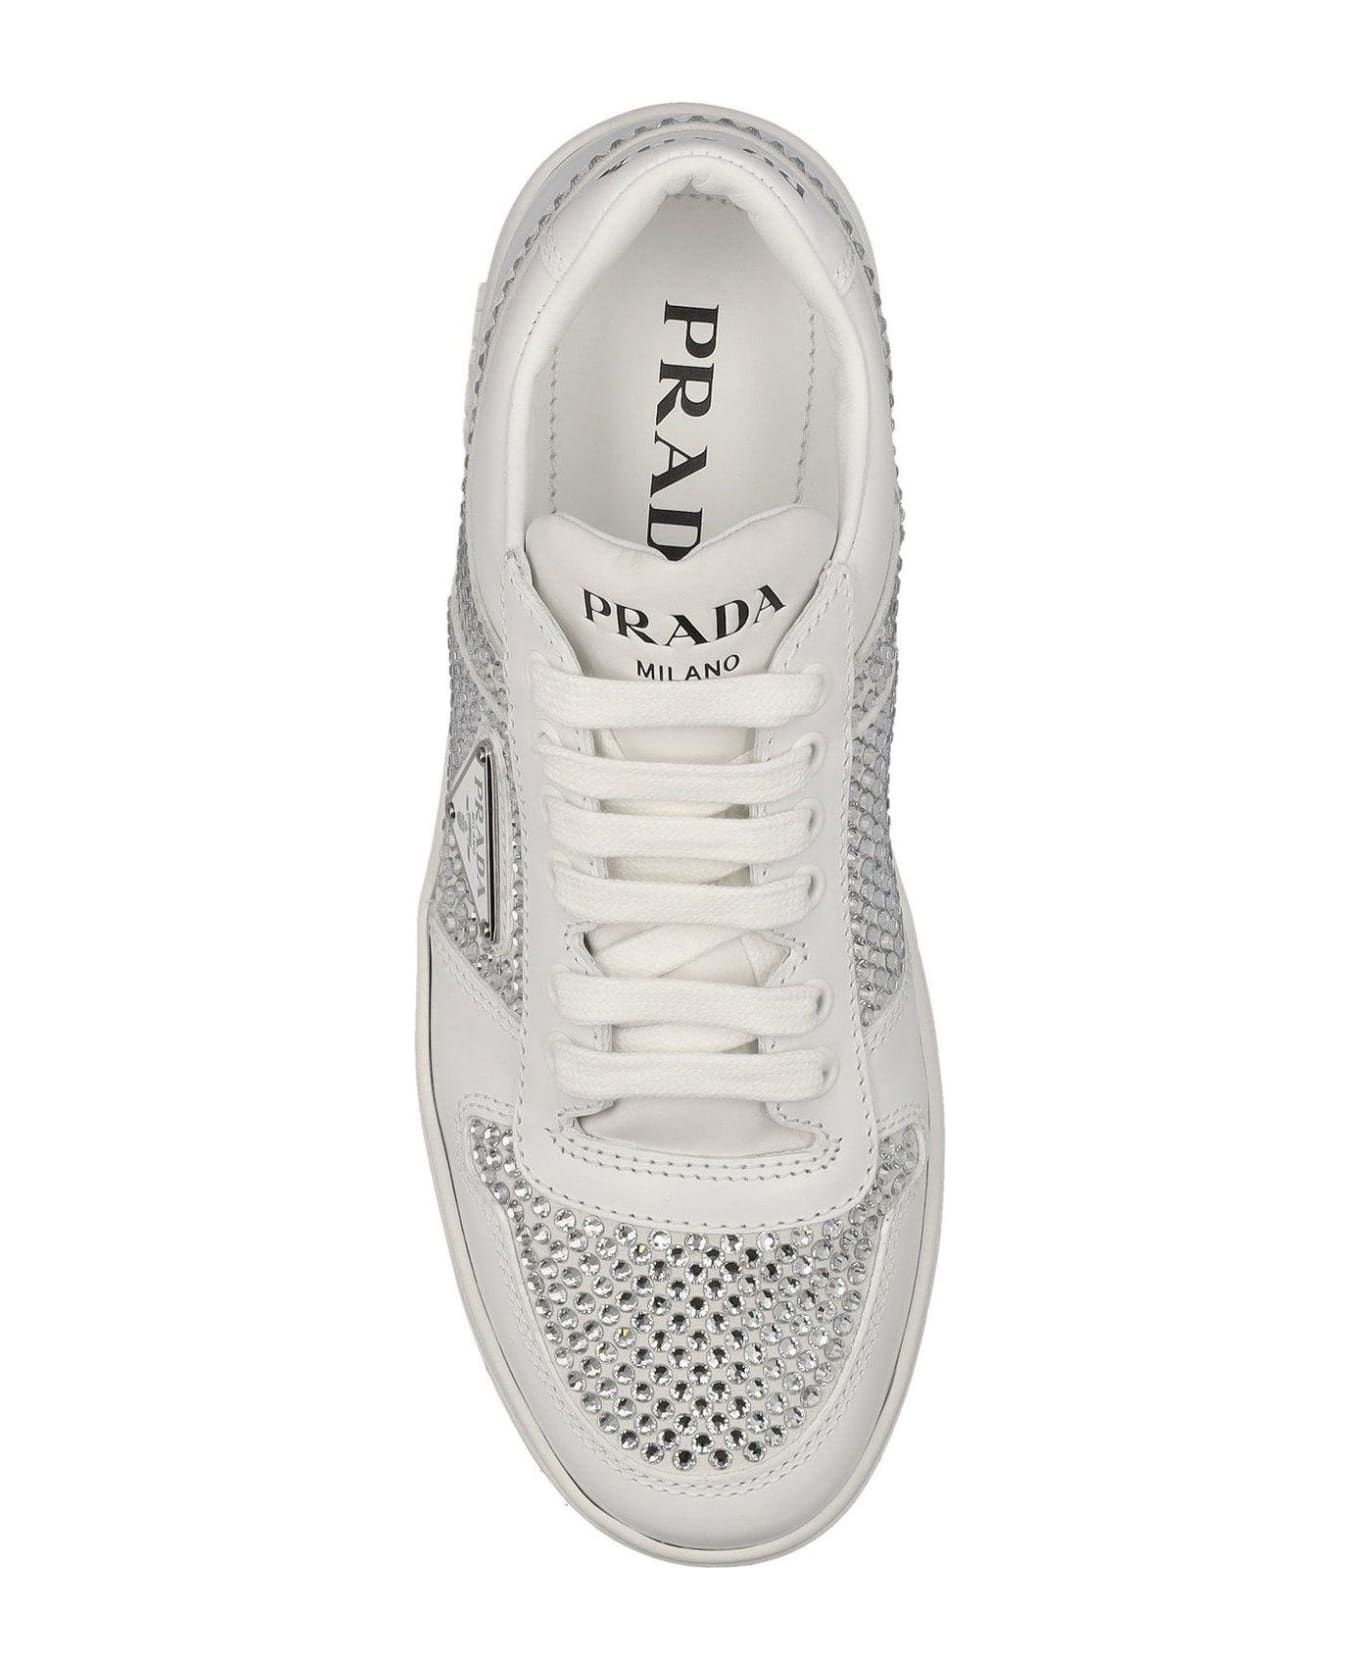 Prada Embellished Lace-up Sneakers - Bianco